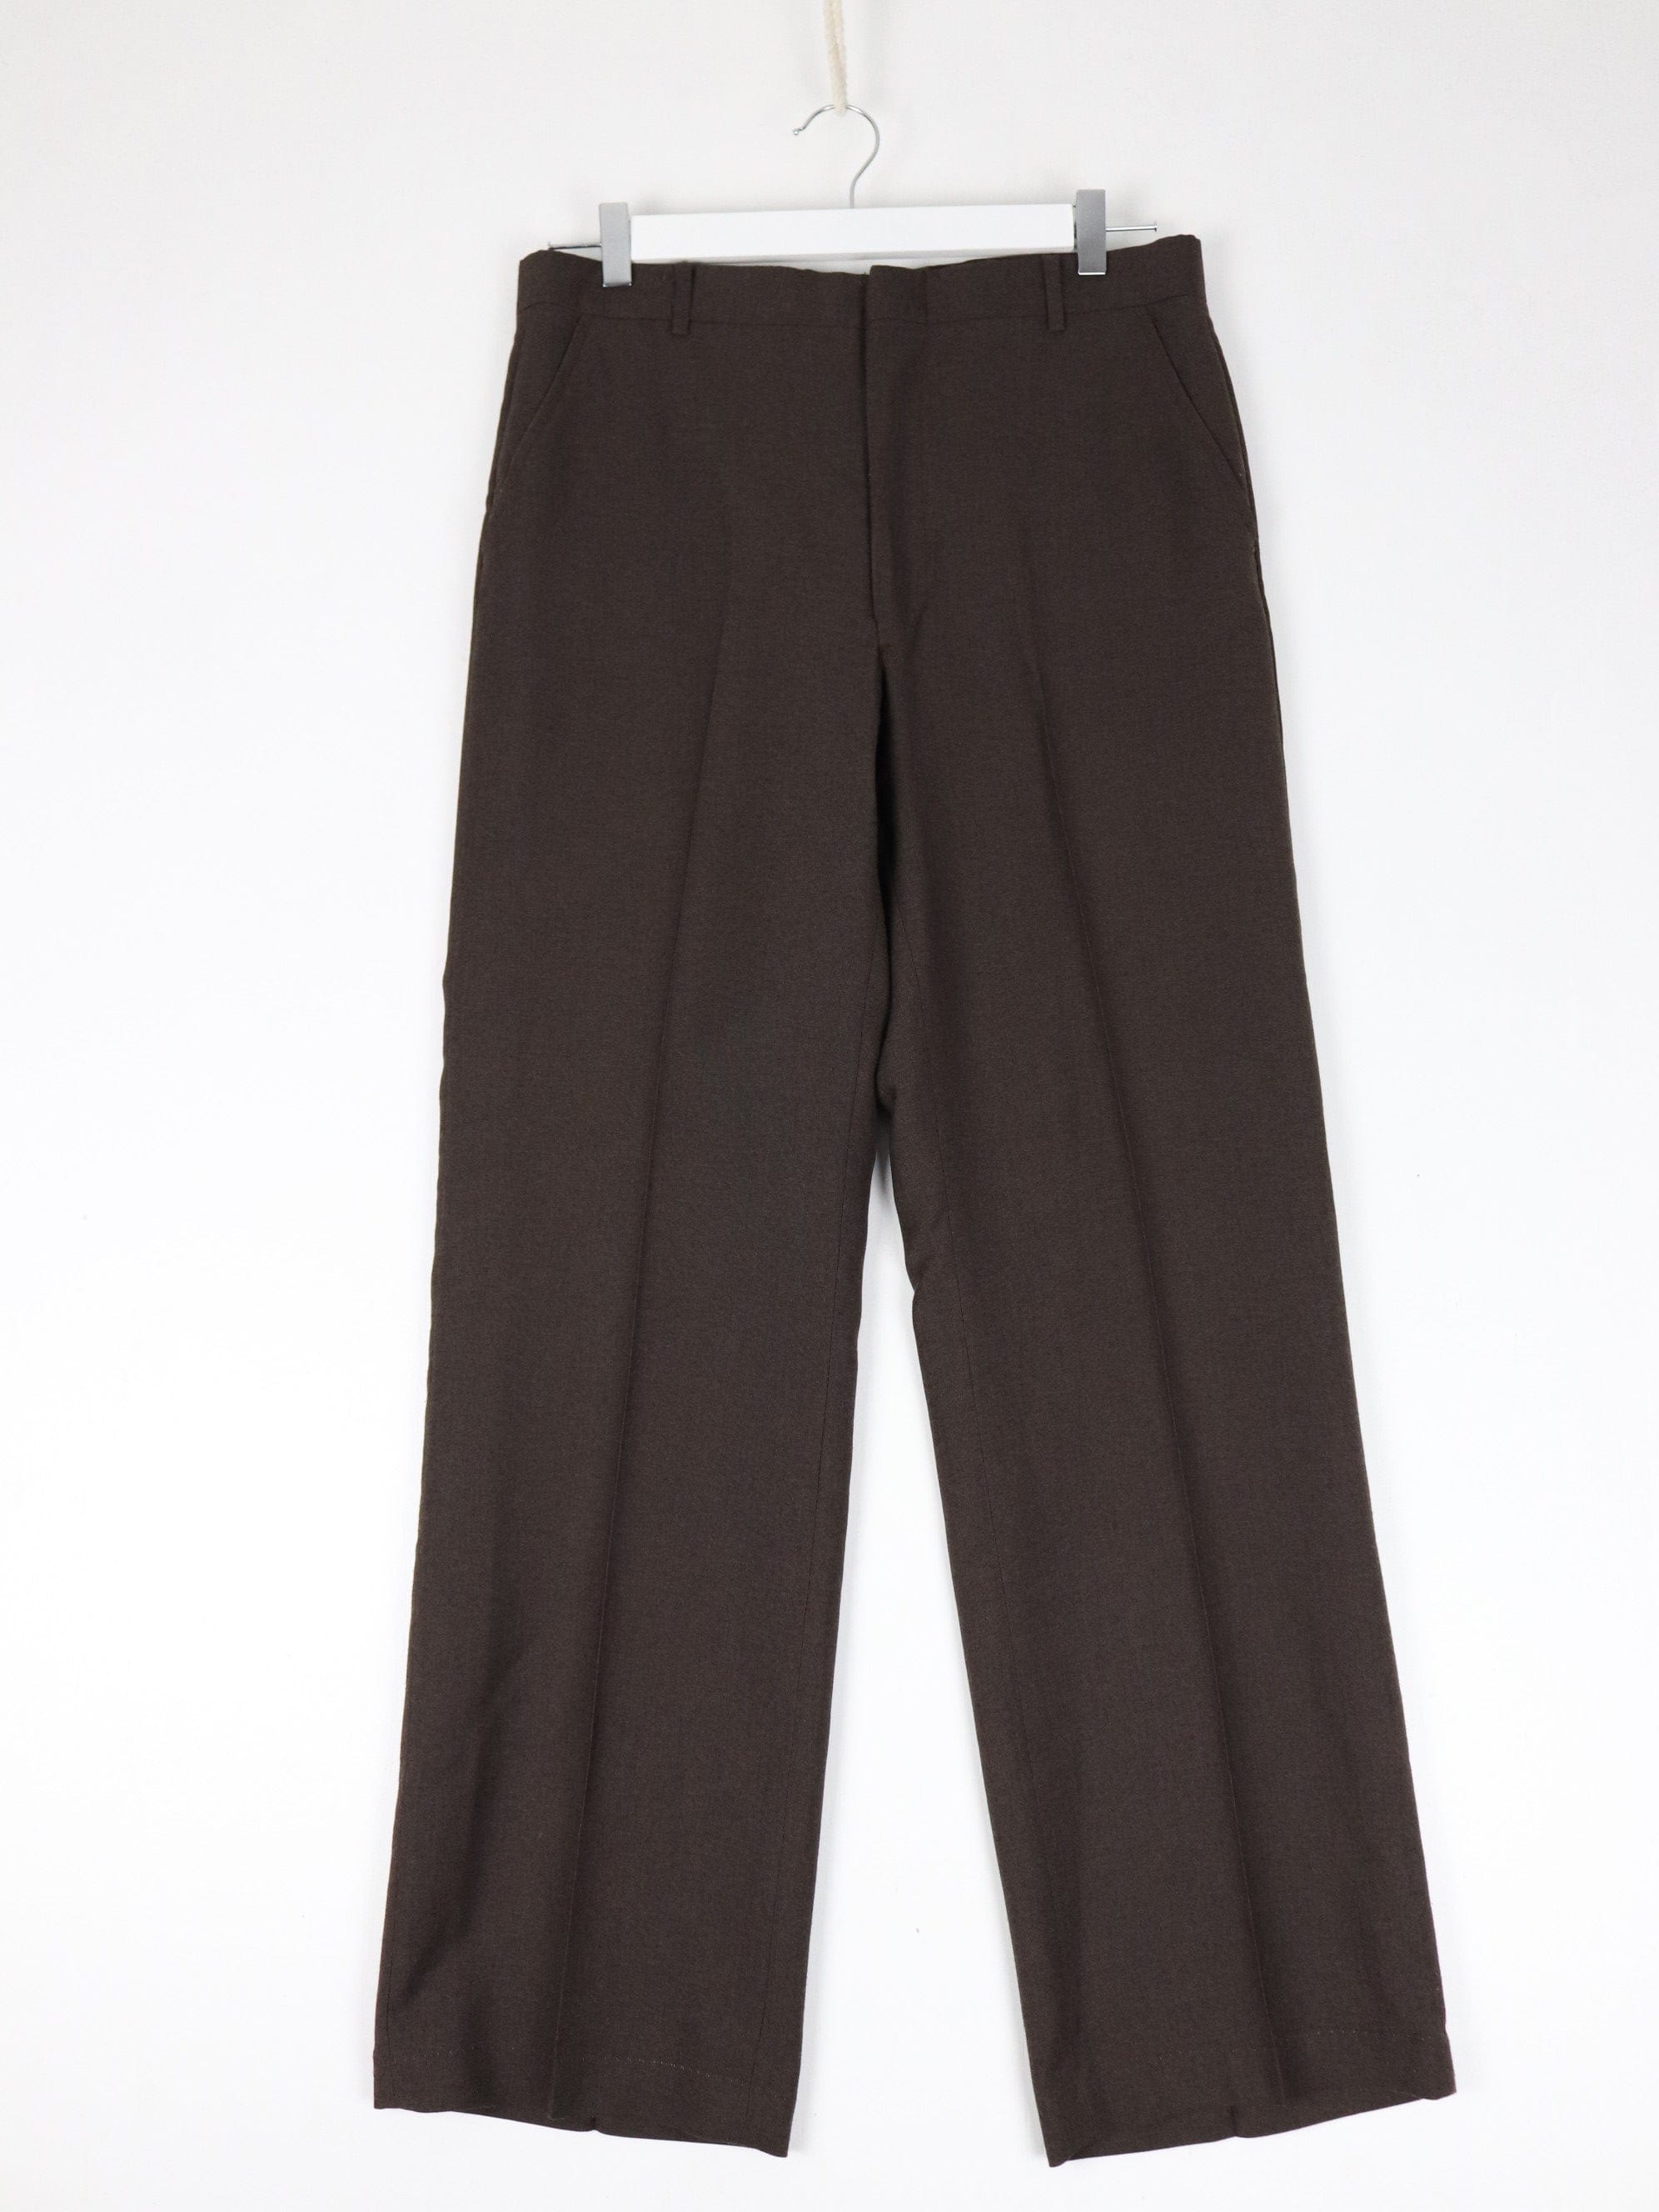 Vintage Towncraft Pants Mens 32 x 30 Brown Pleated 80s Dress Trousers –  Proper Vintage